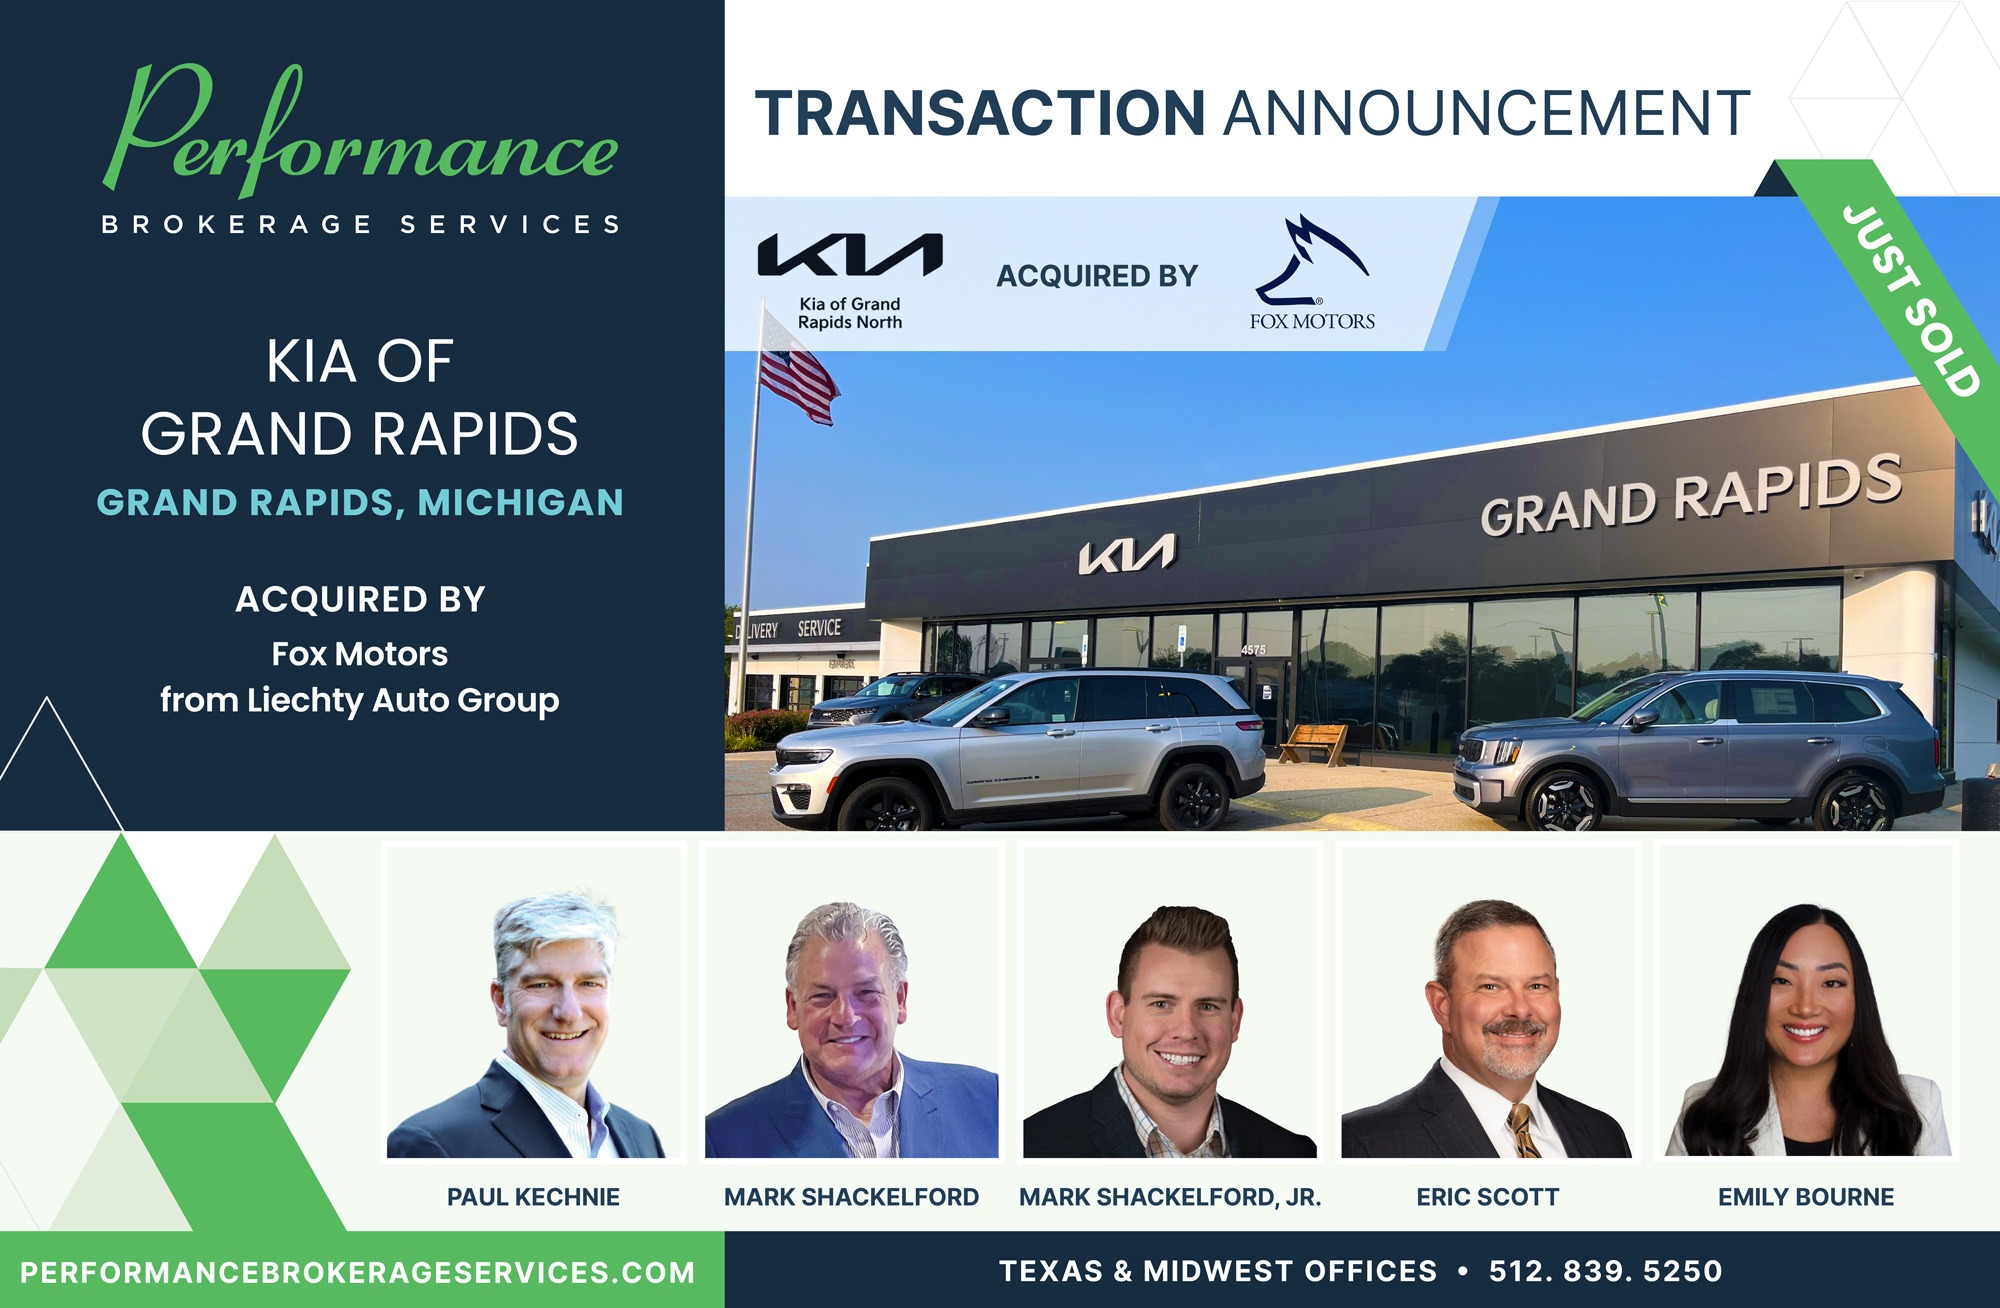 Kia Grand Rapids sells to Fox Motors with Performance Brokerage